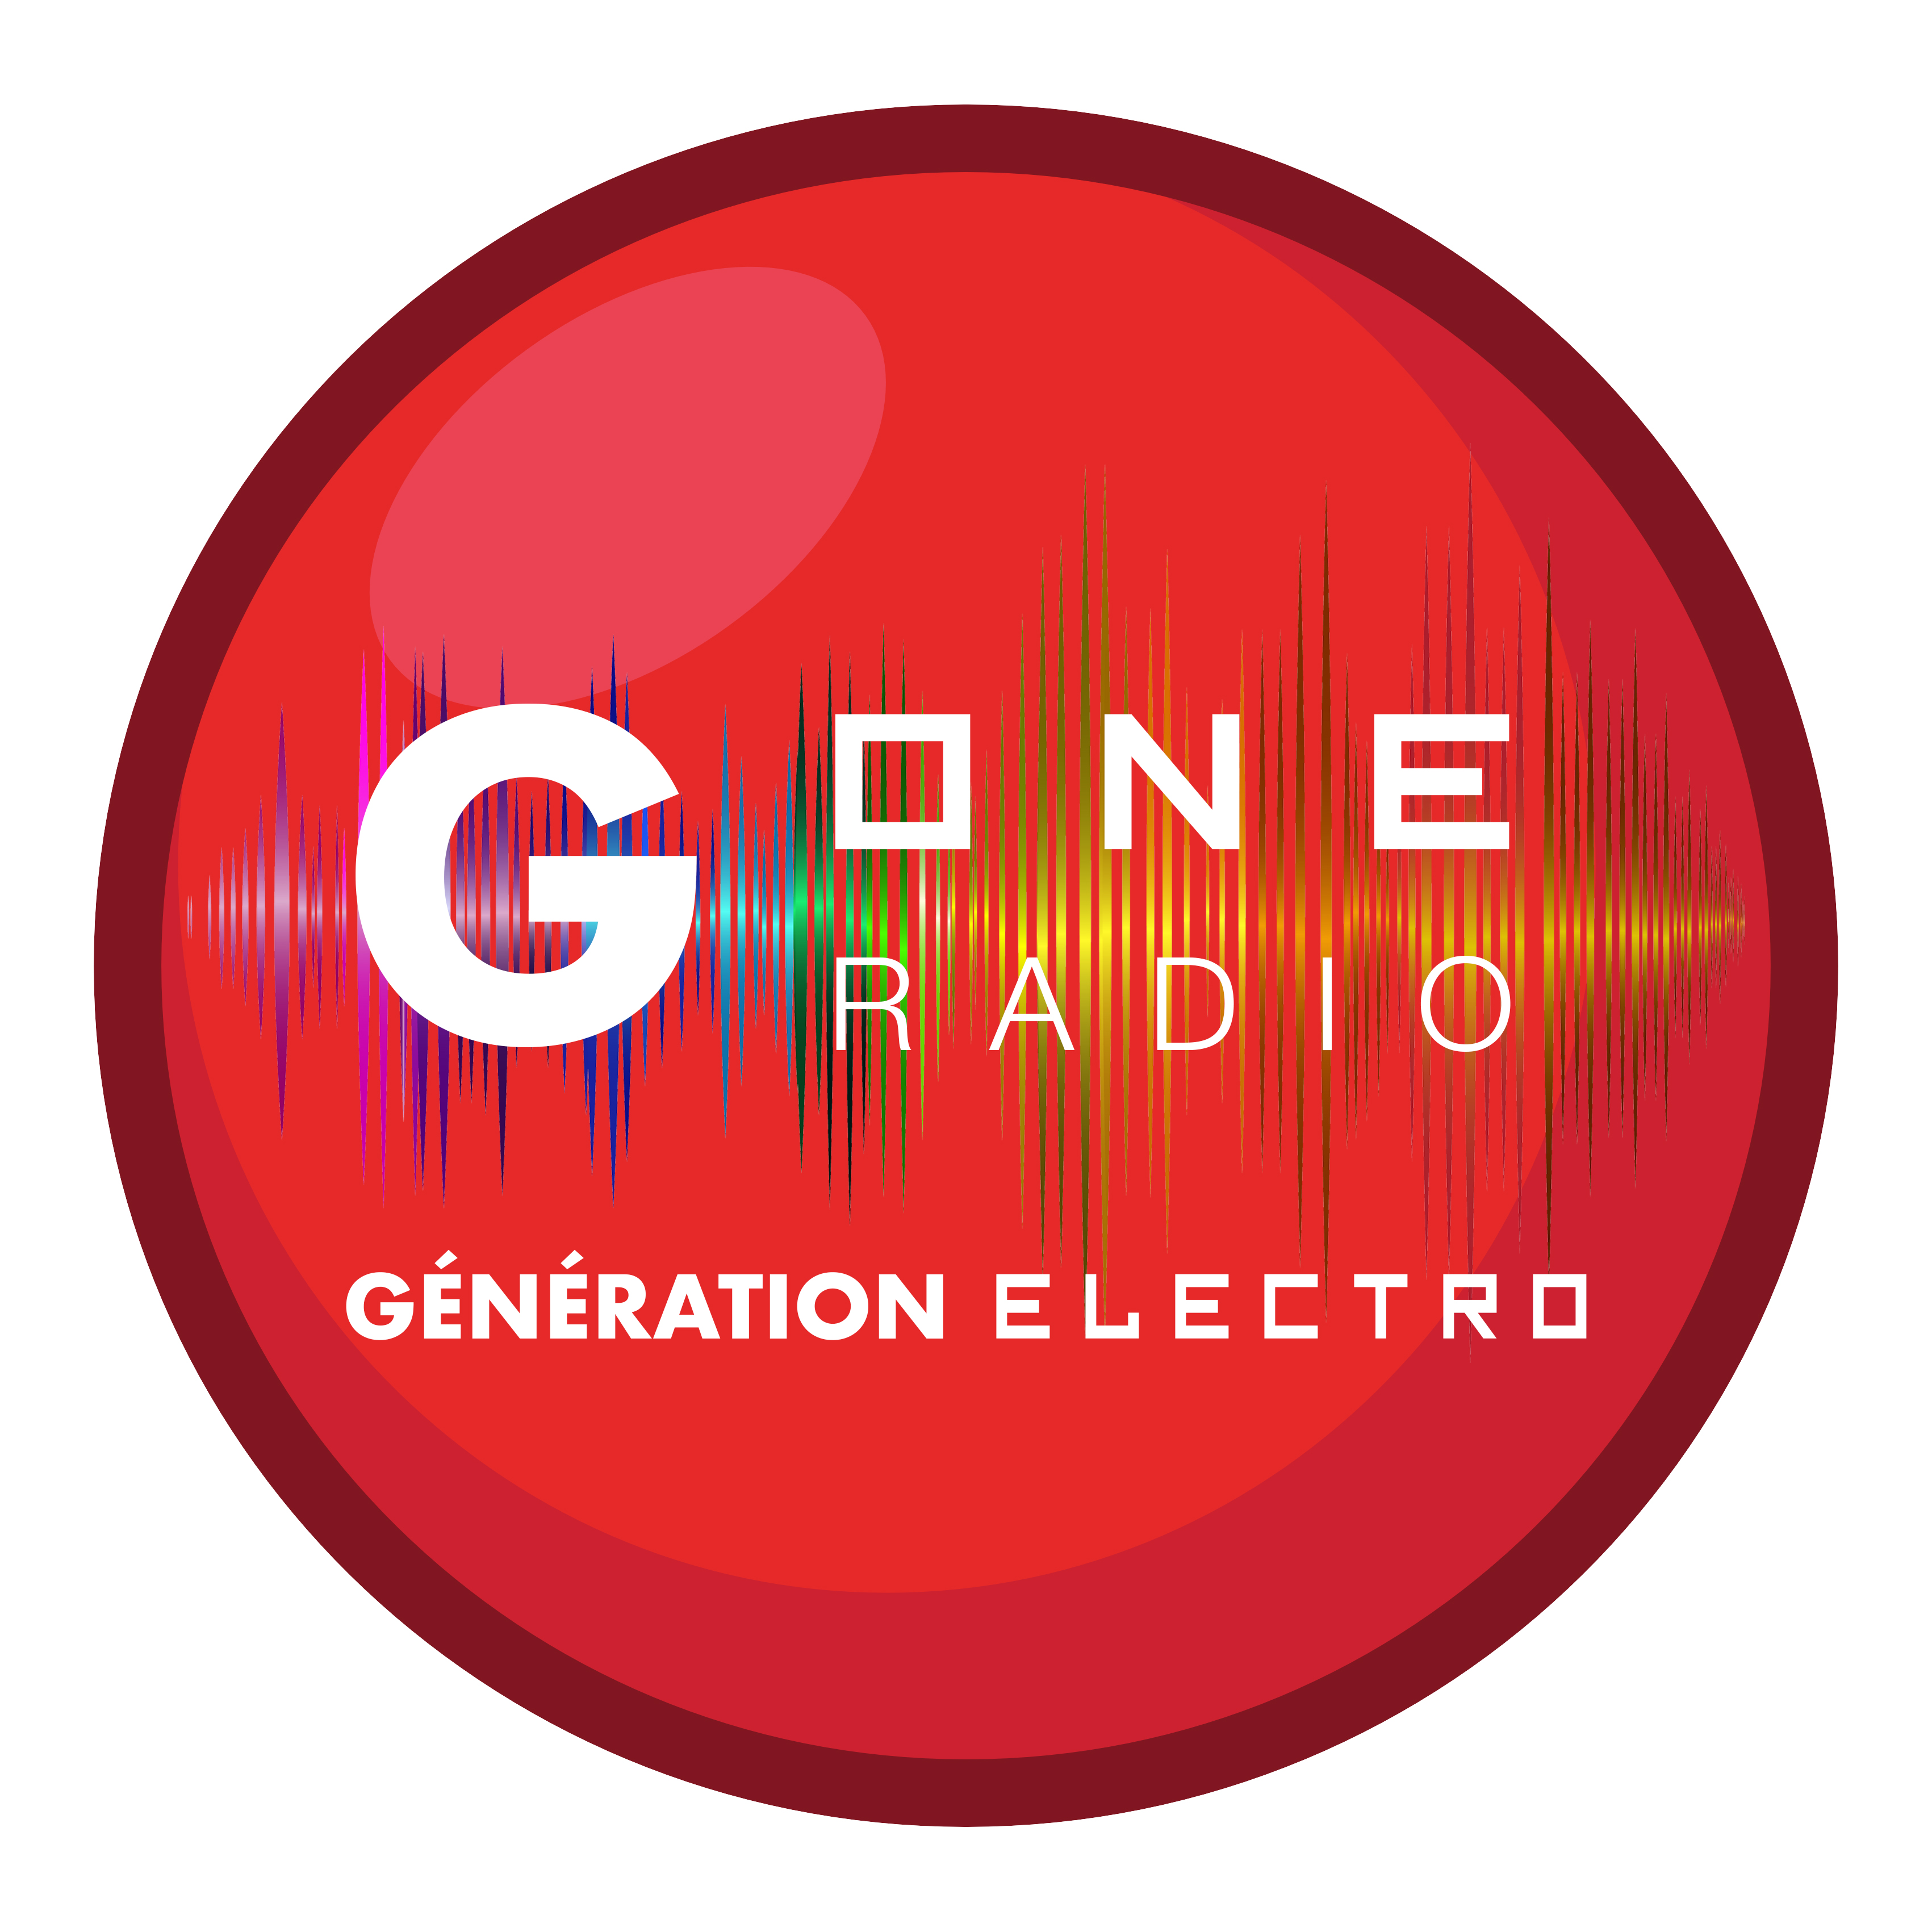 LOGO_ROND_G_ONE_RADIO_GENERATION.jpg (2.03 MB)